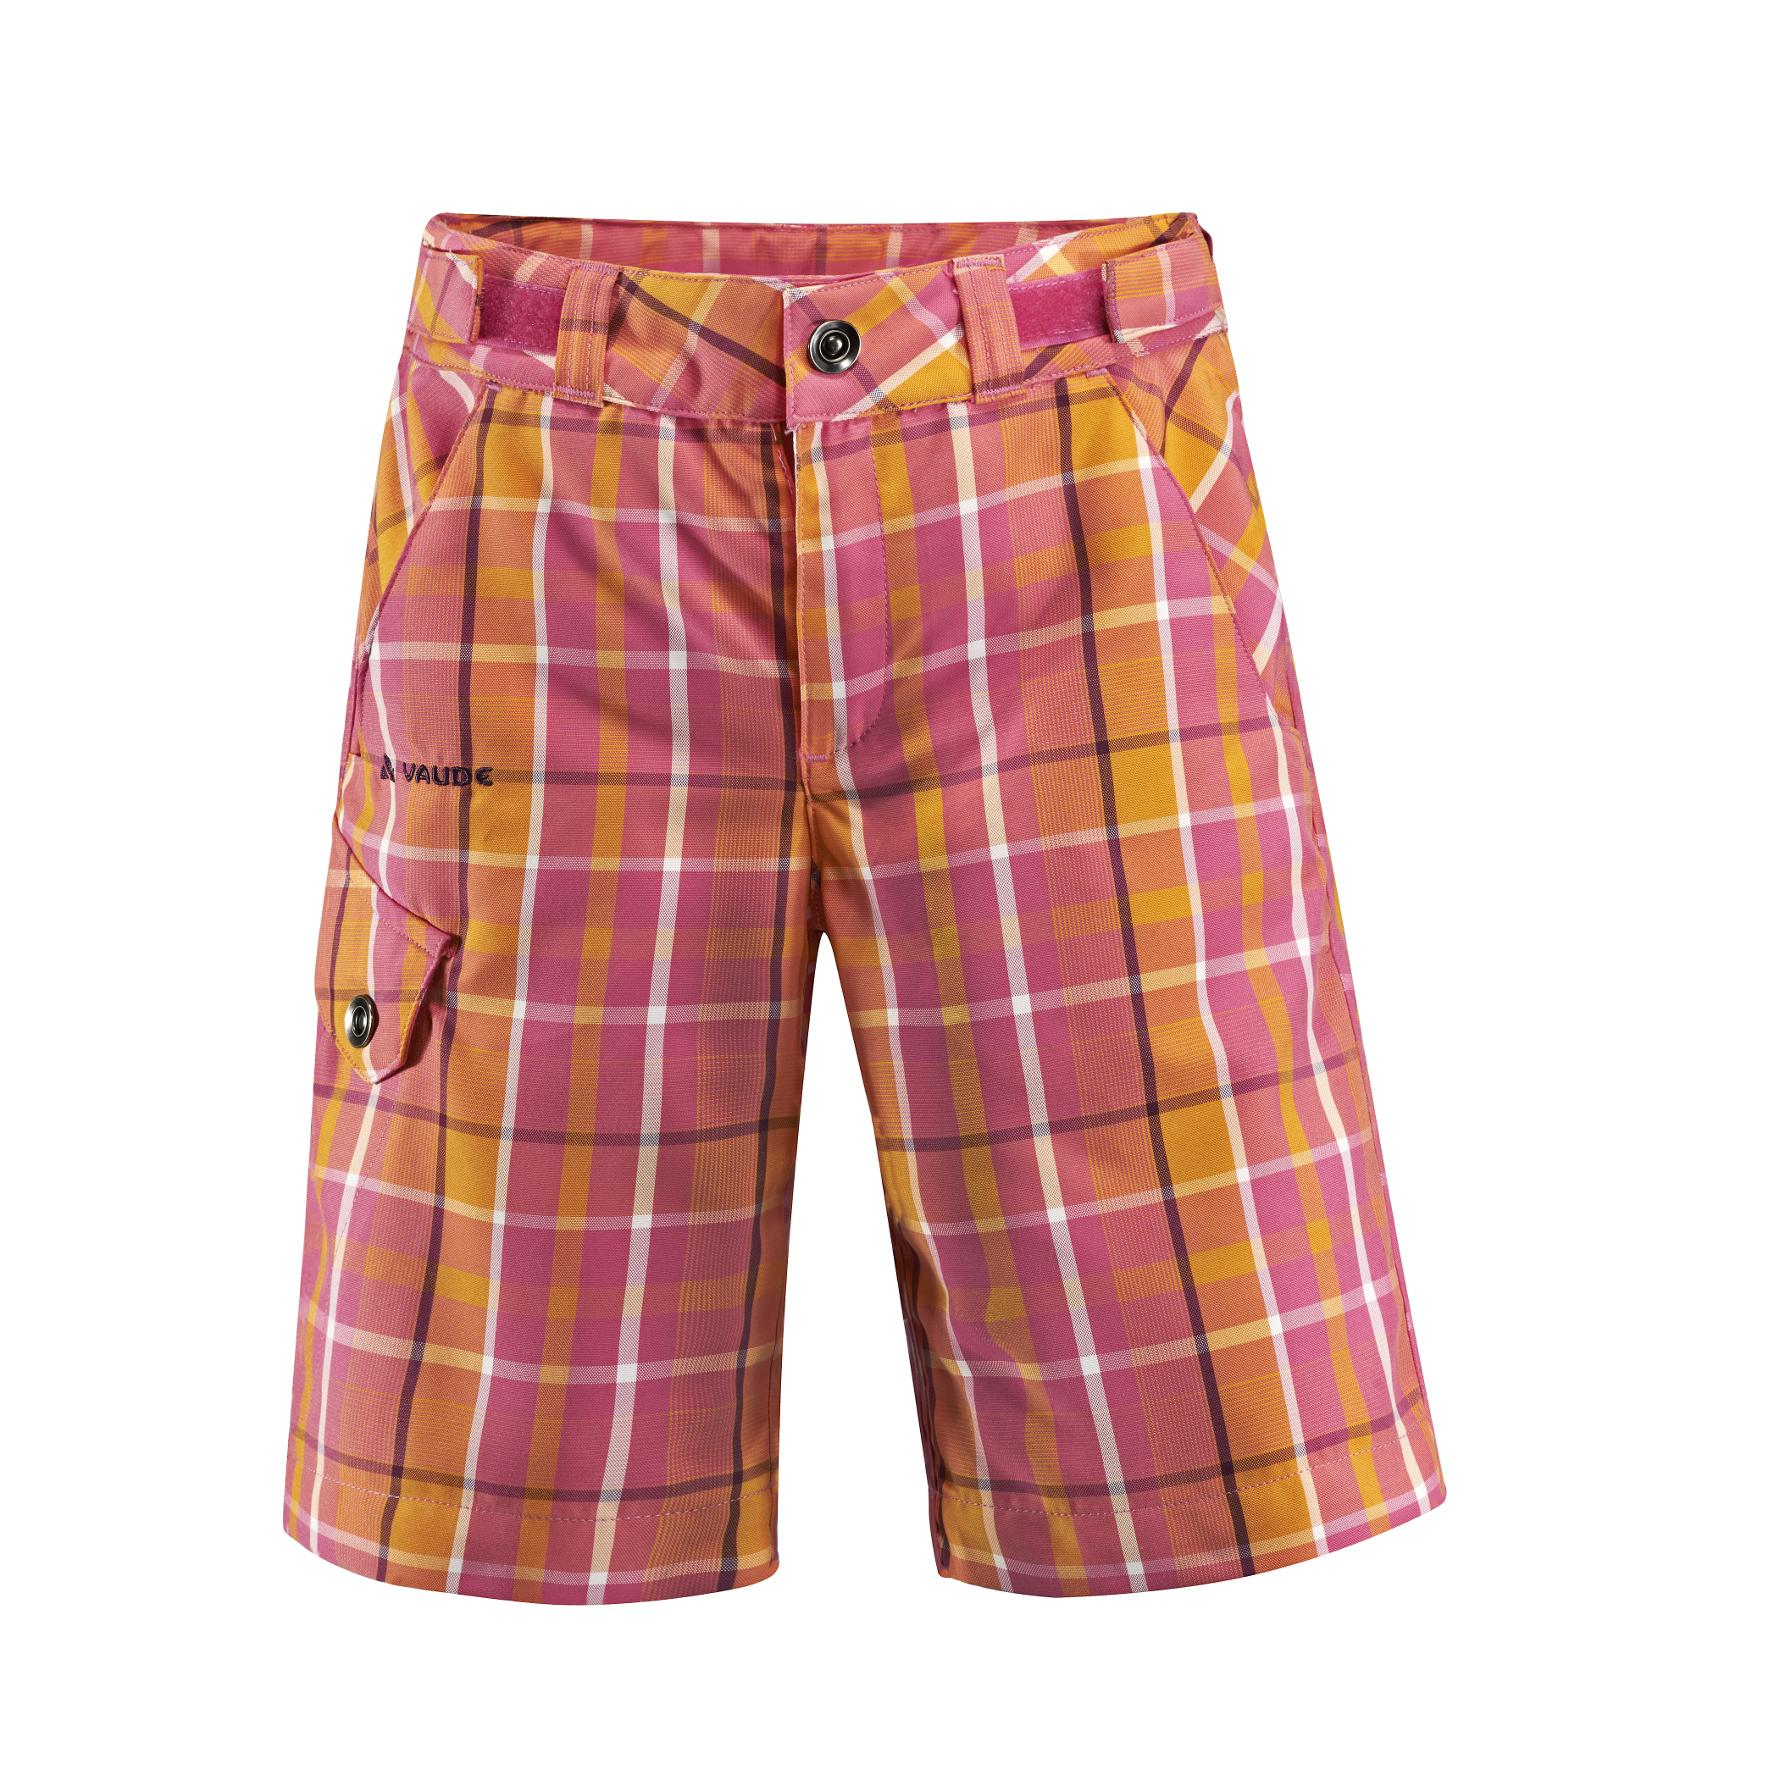 Foto Pantalones cortos Vaude Parcupine anaranjado/rosa para niño , 110-116